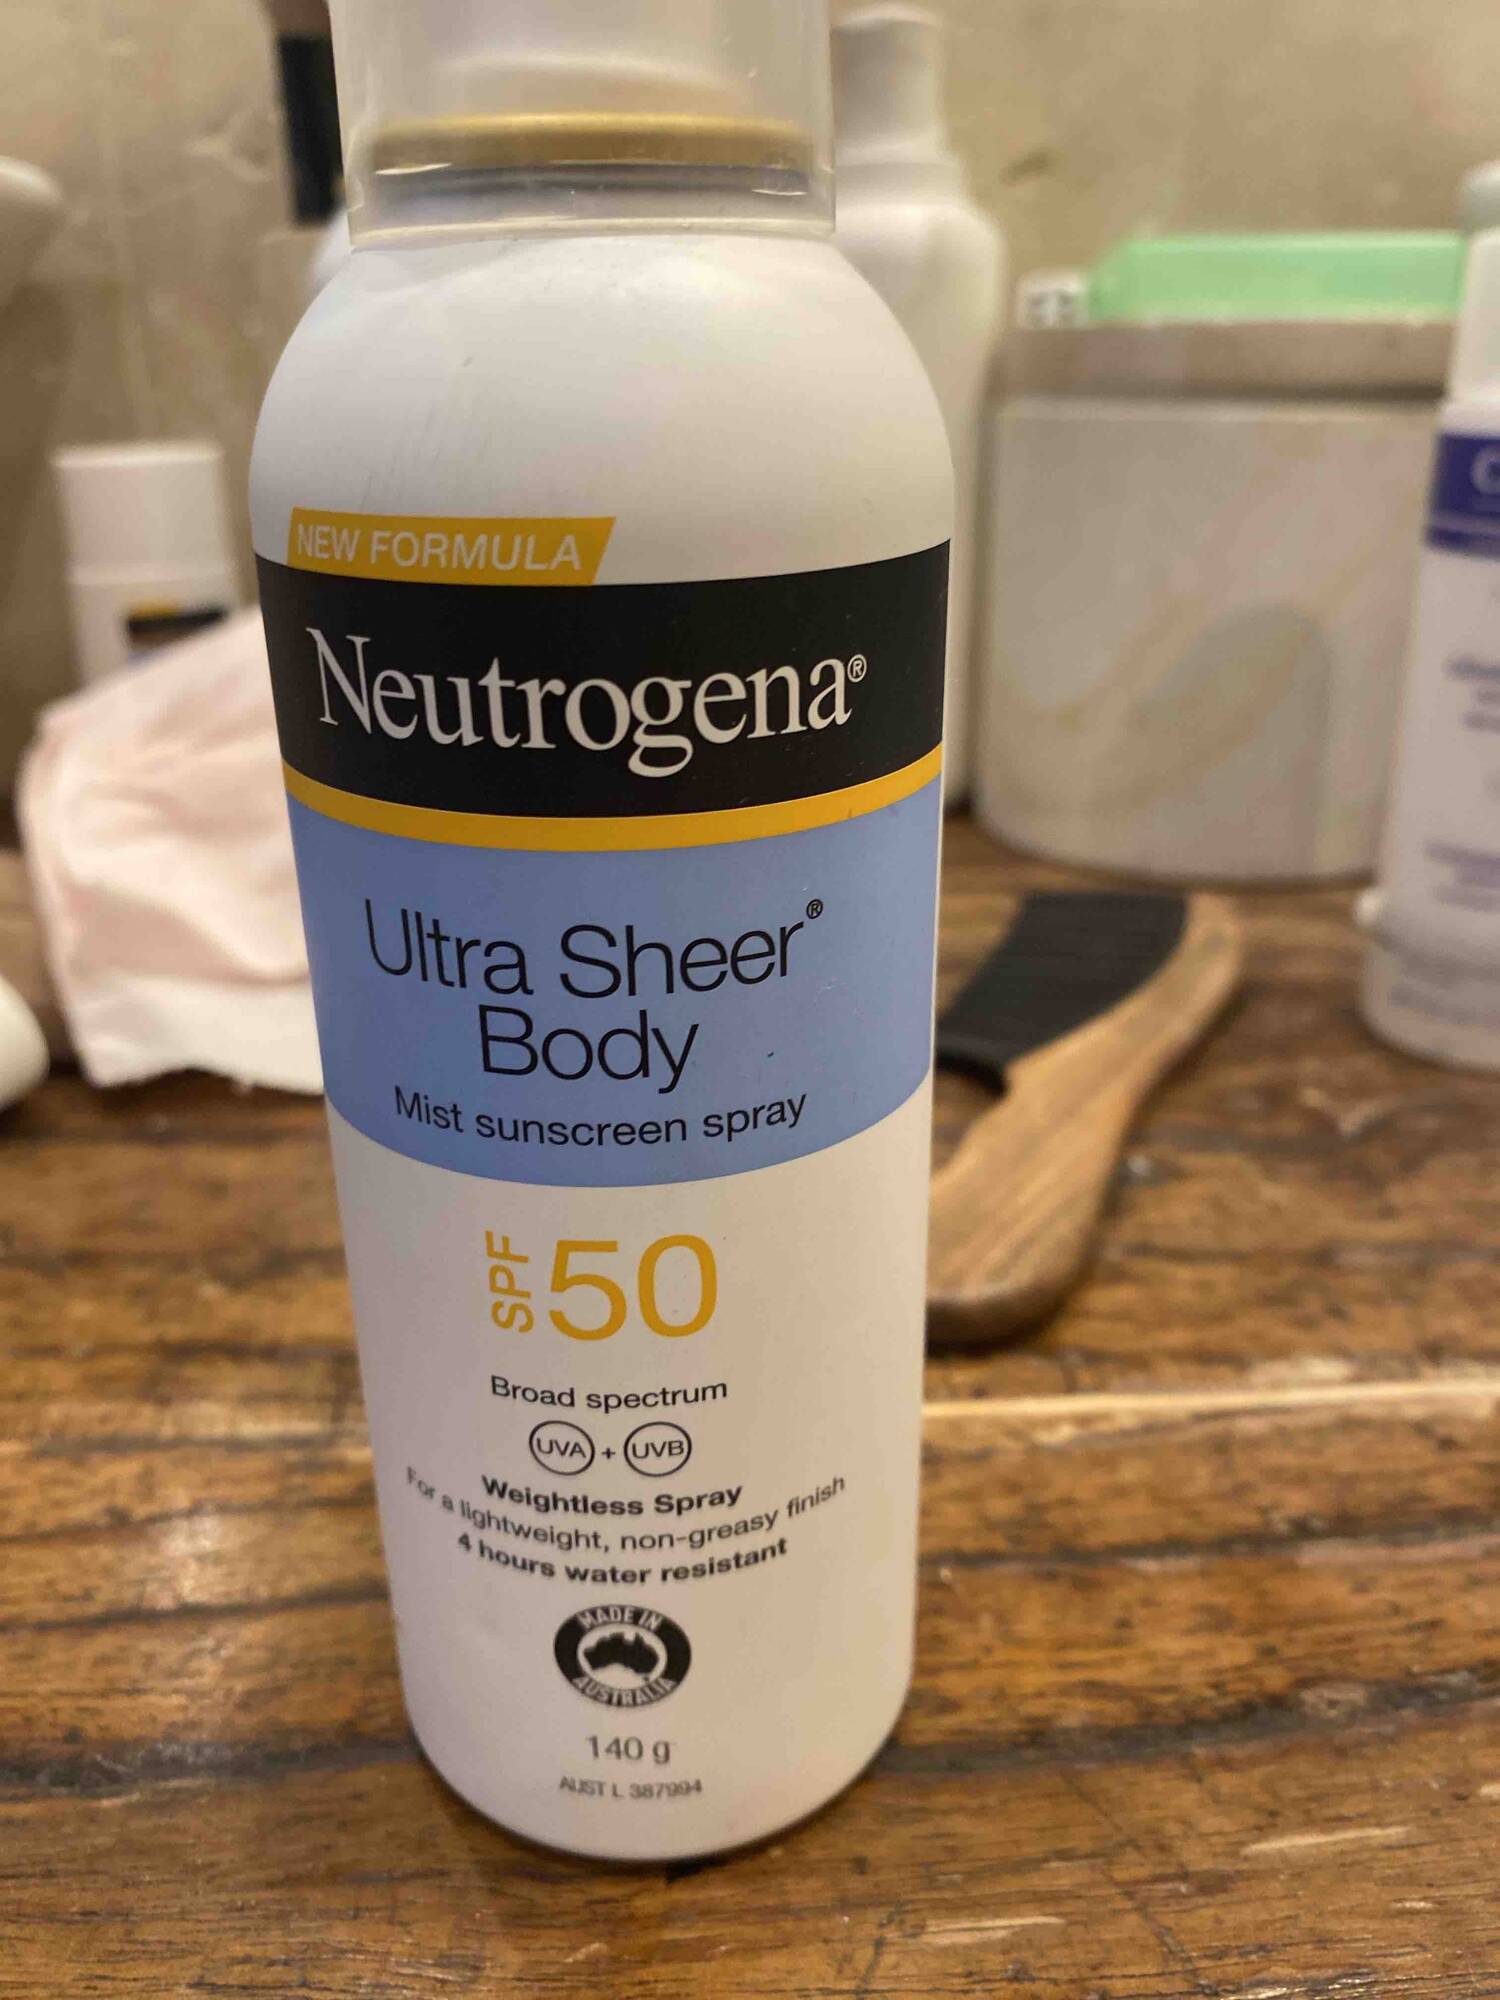 NEUTROGENA - Ultra sheer body - Mist sunscreen spray